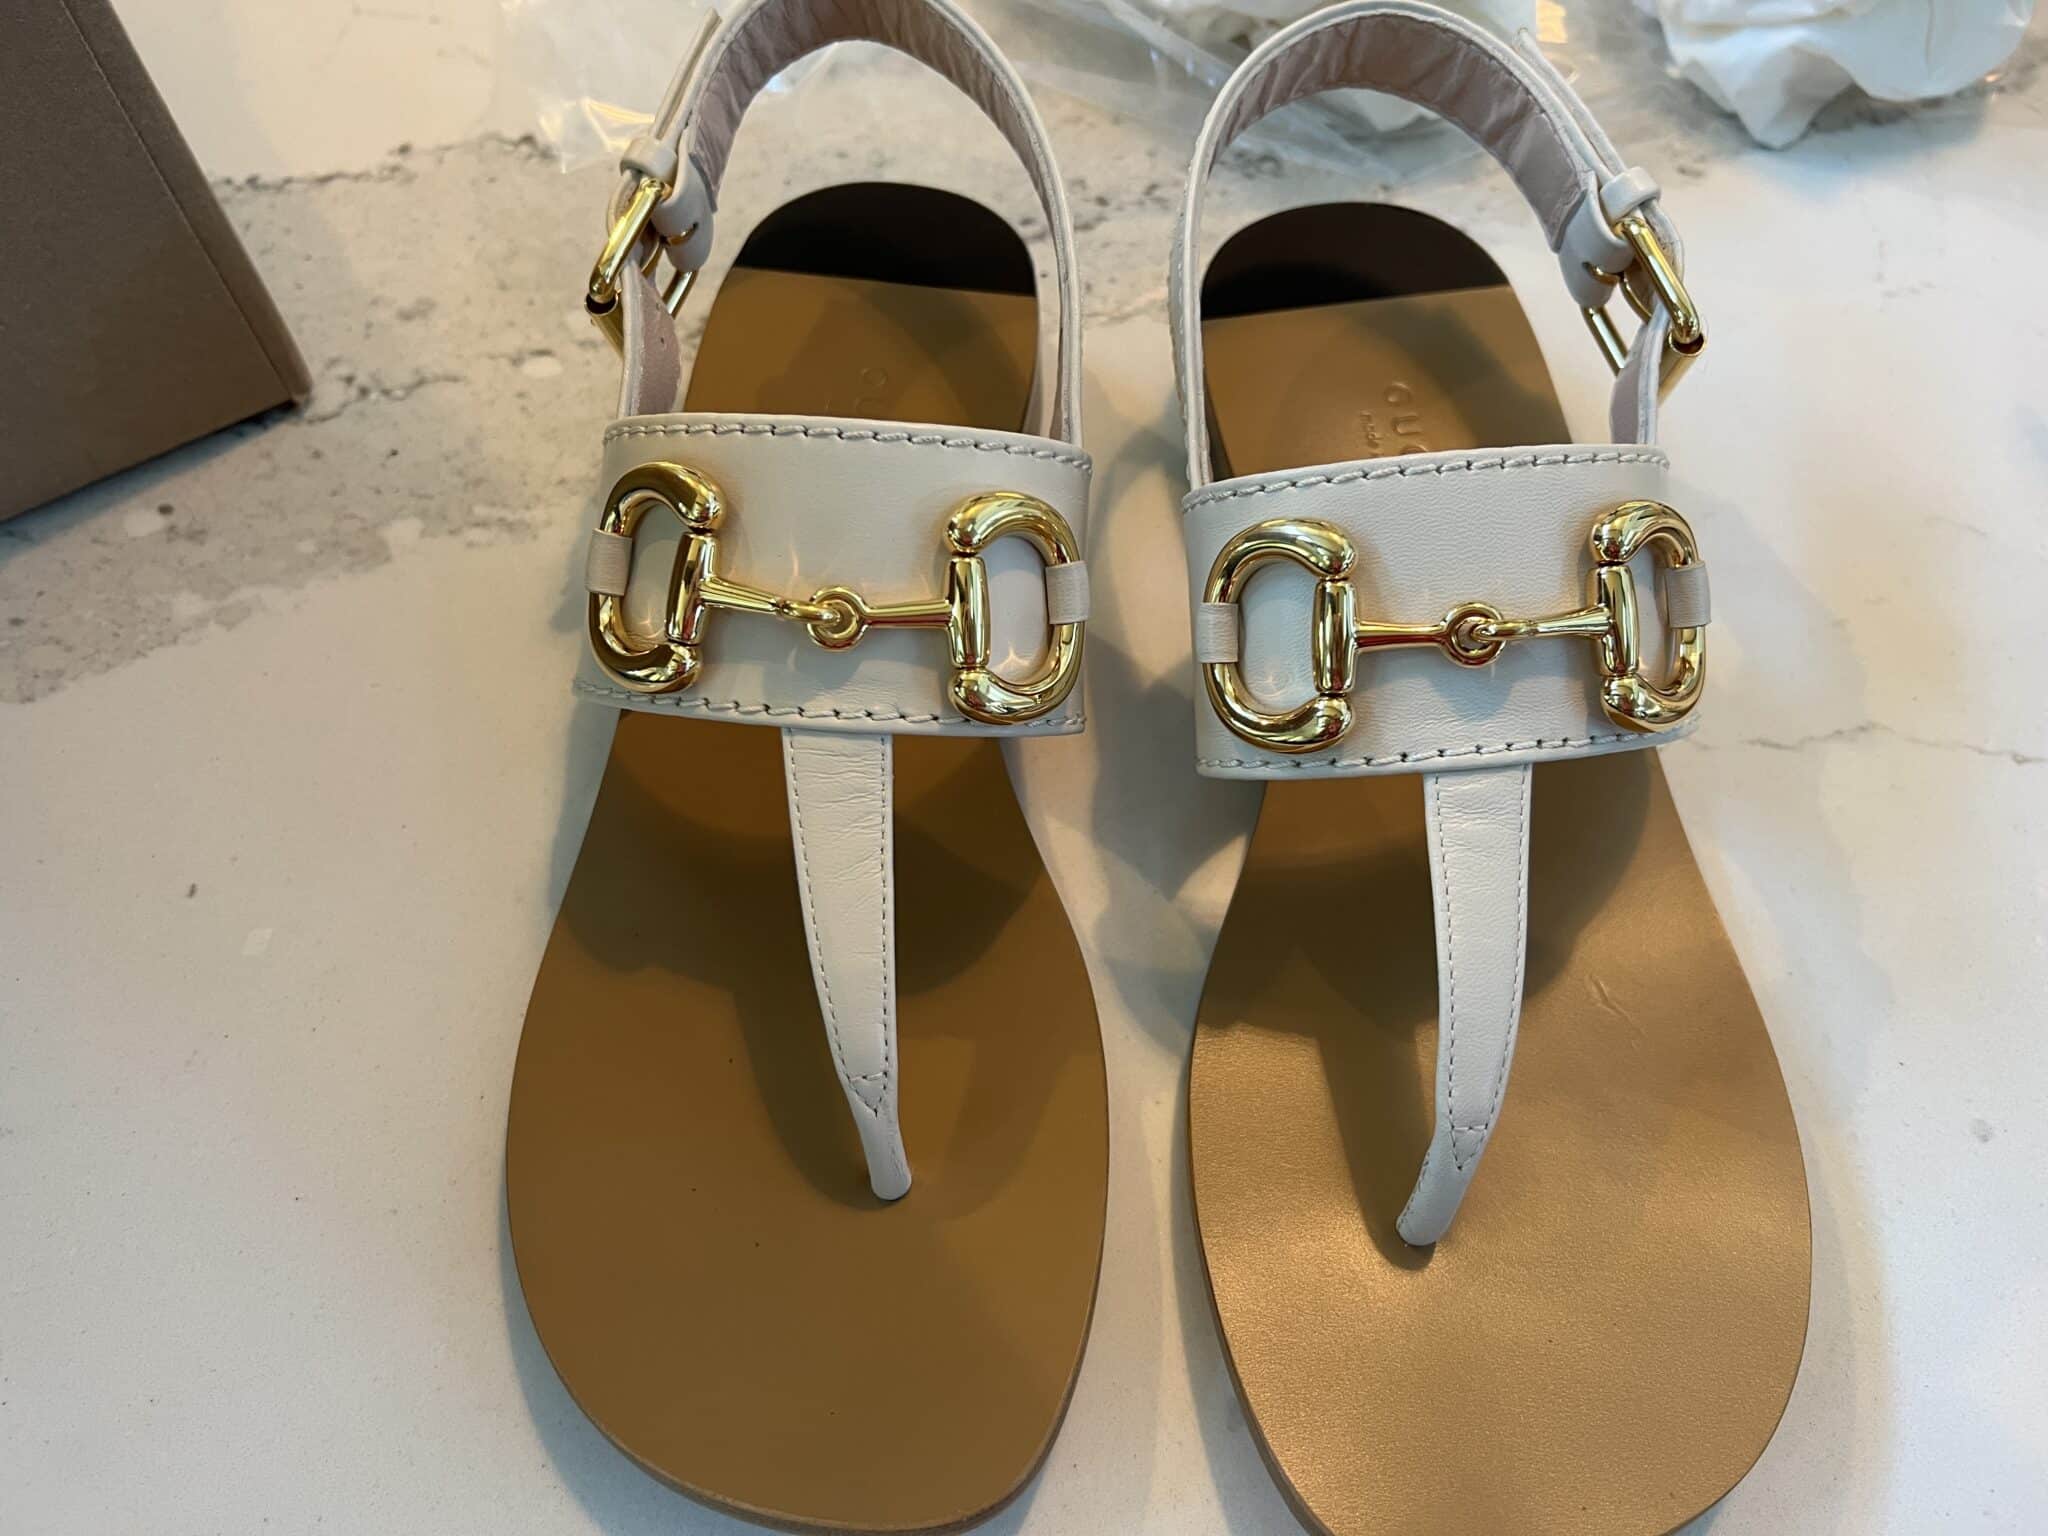 Gucci horsebit sandals from SSENSE